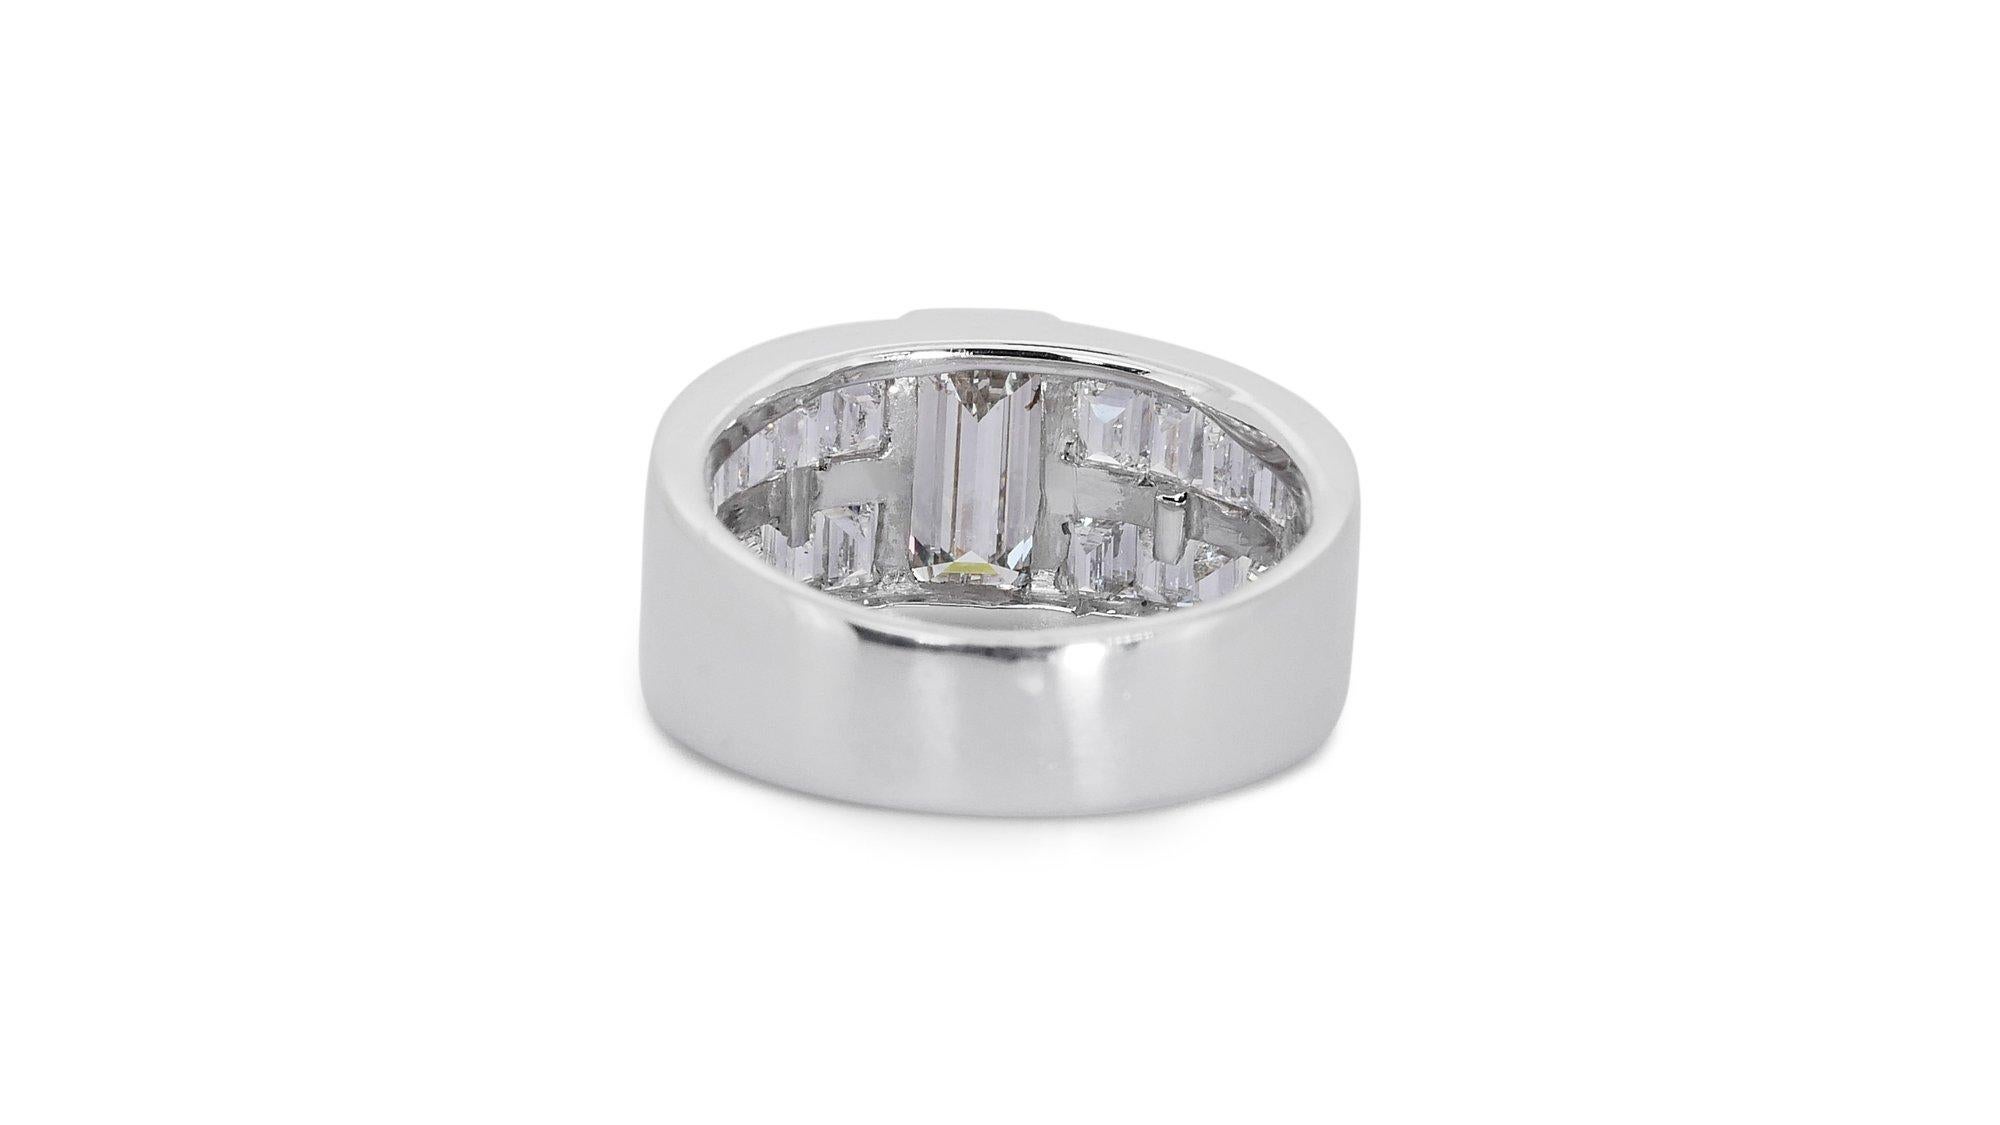 Glamorous 18K White Gold Dome Ring w/ 1.90 ct Natural Diamonds IGI Certificate For Sale 1